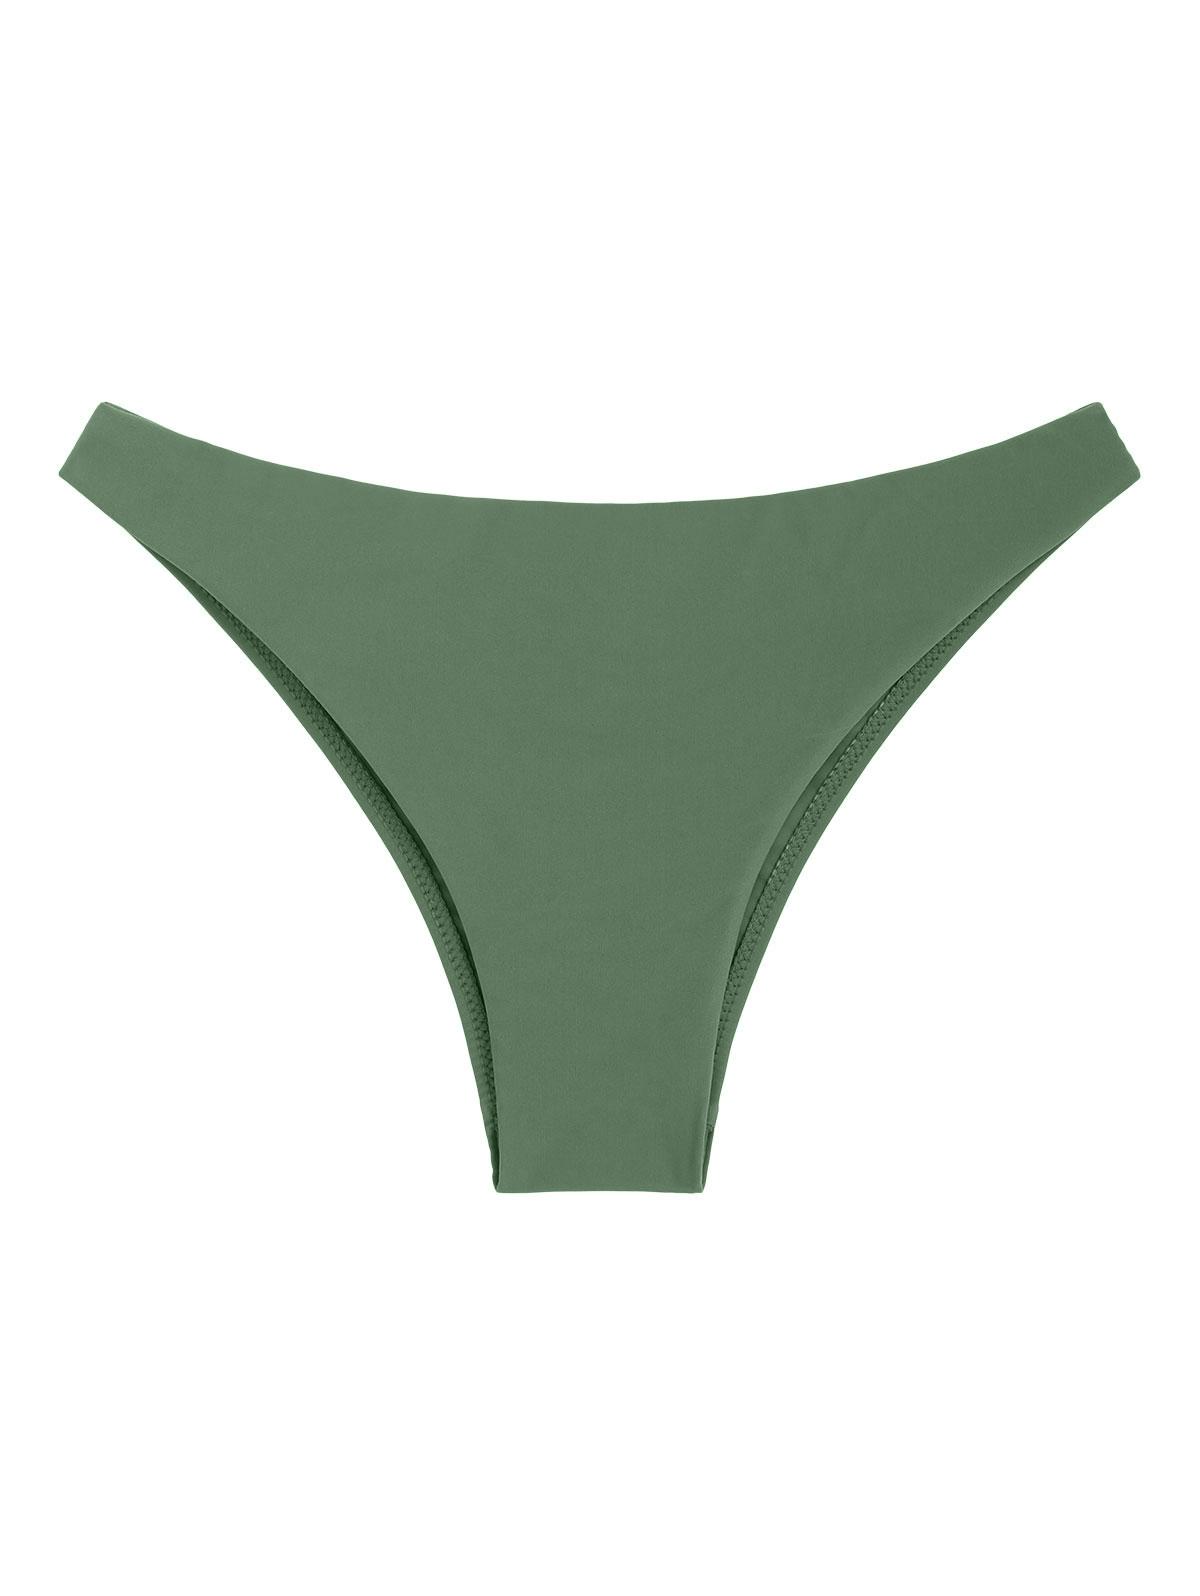 ZAFUL Bikini Bottom con Estampado M Verde claro